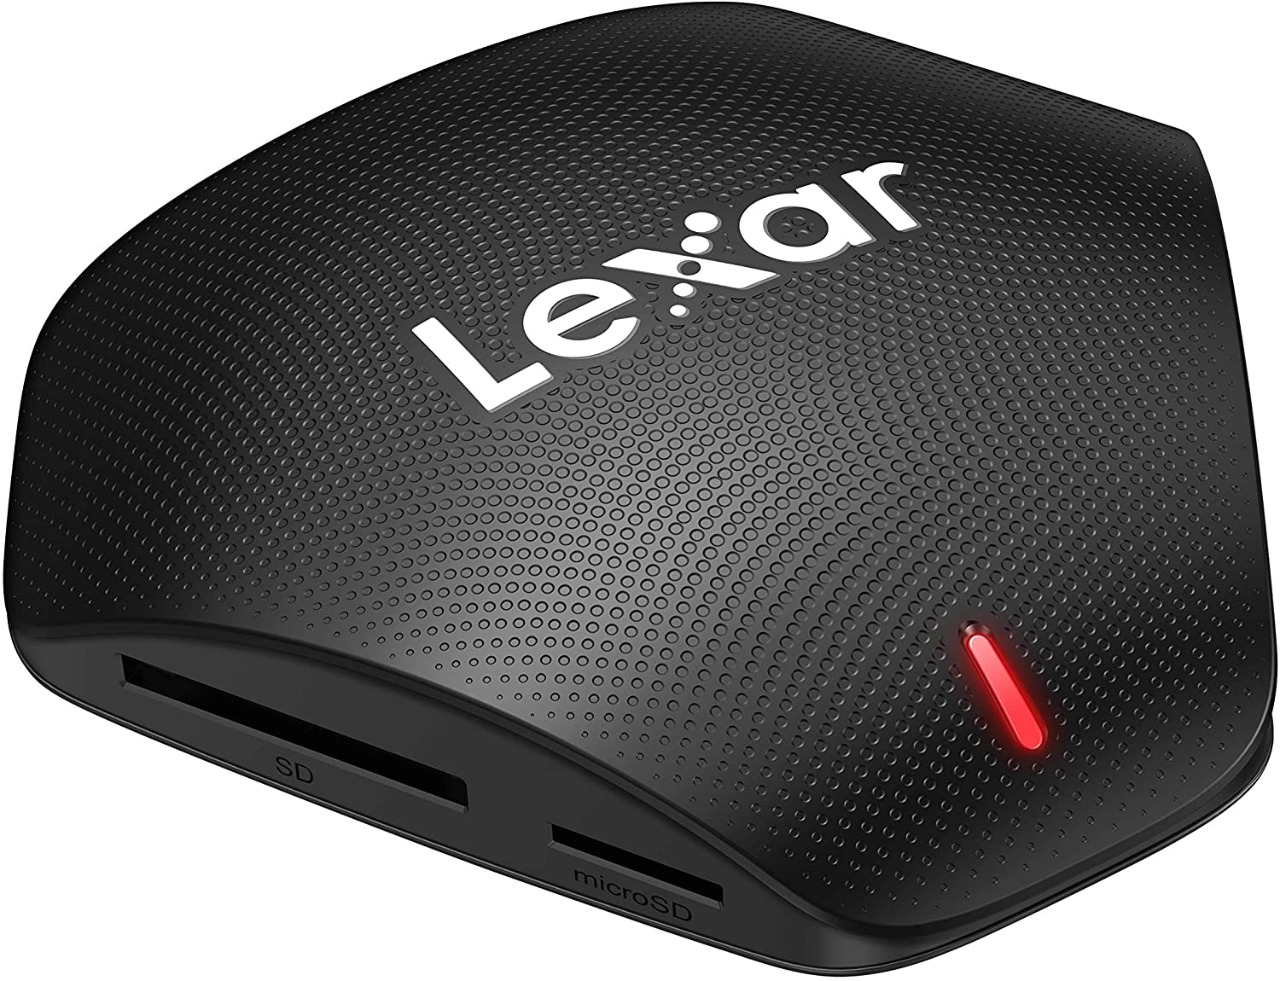 LEITOR DE CARTAO LEXAR PROFISSIONAL SD / CF USB 3.0 LEXAR